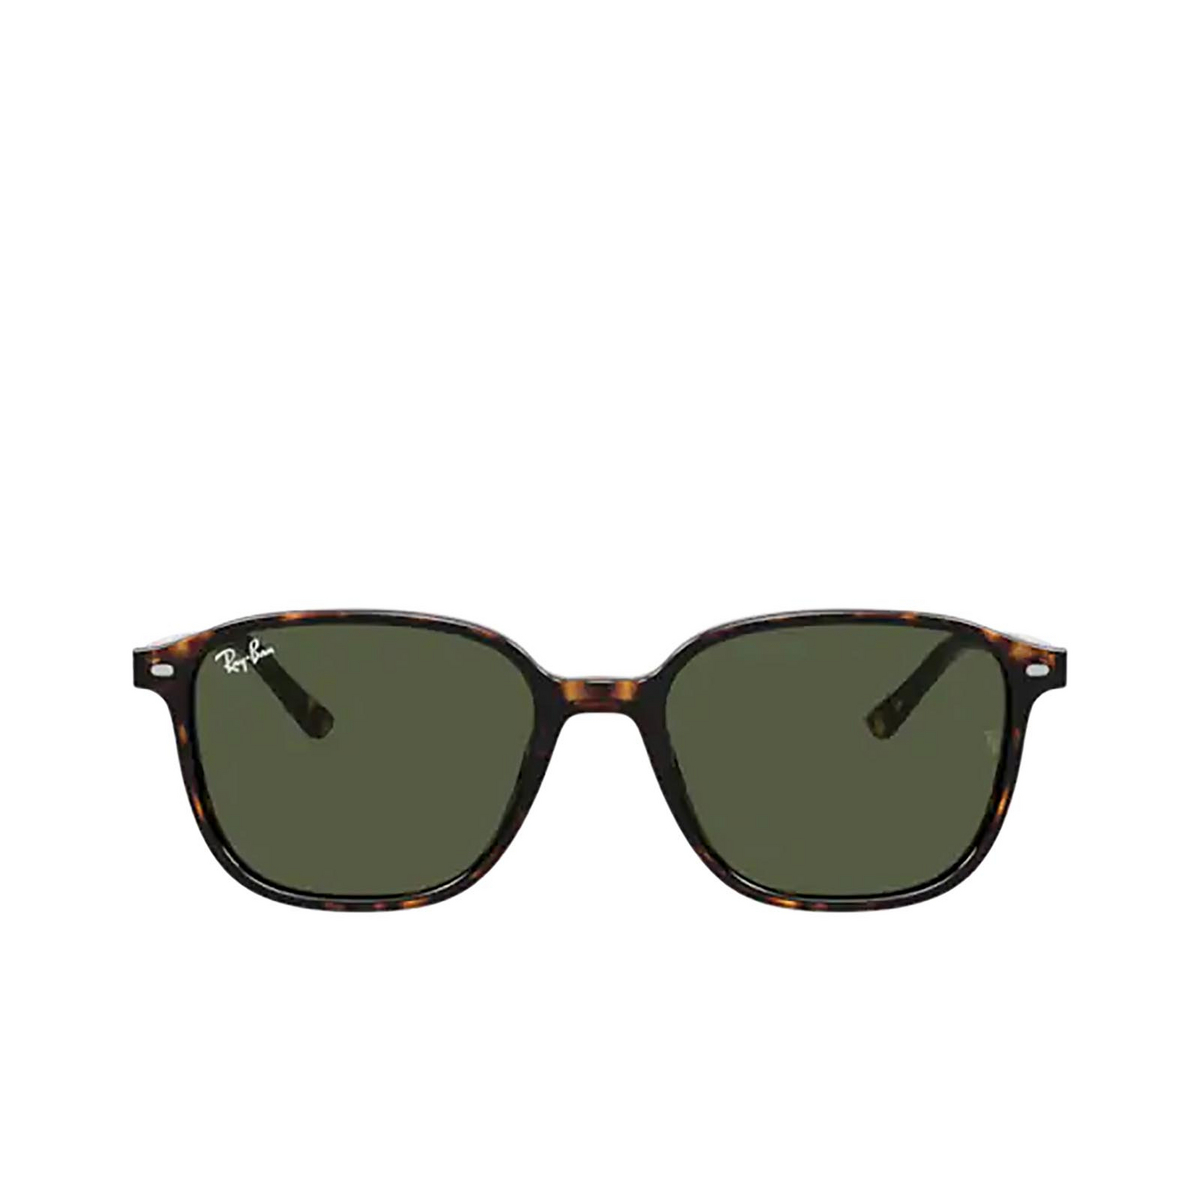 Ray-Ban LEONARD Sunglasses 902/31 Tortoise - front view